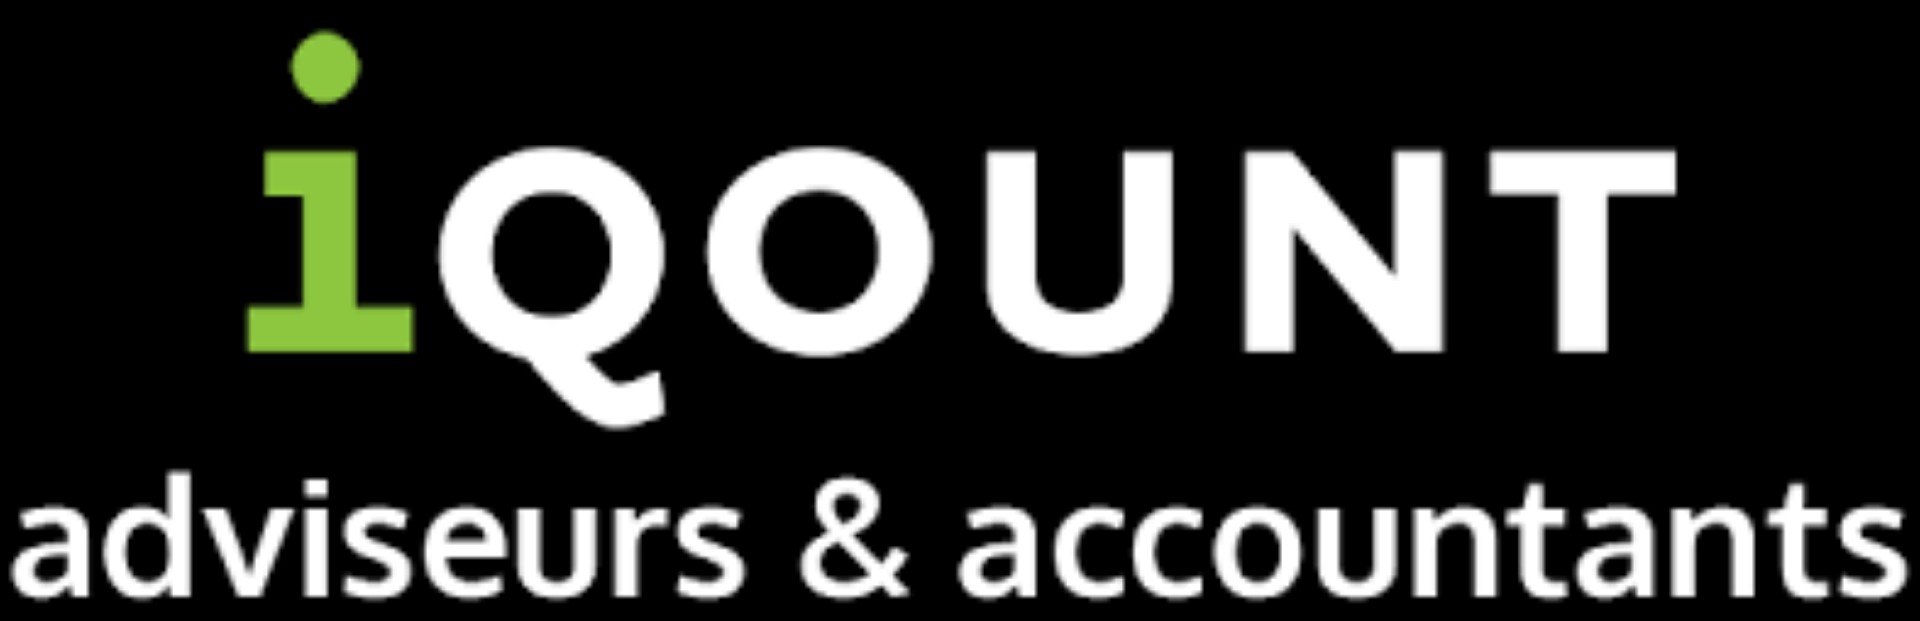 iQOUNT adviseurs & accountants bv